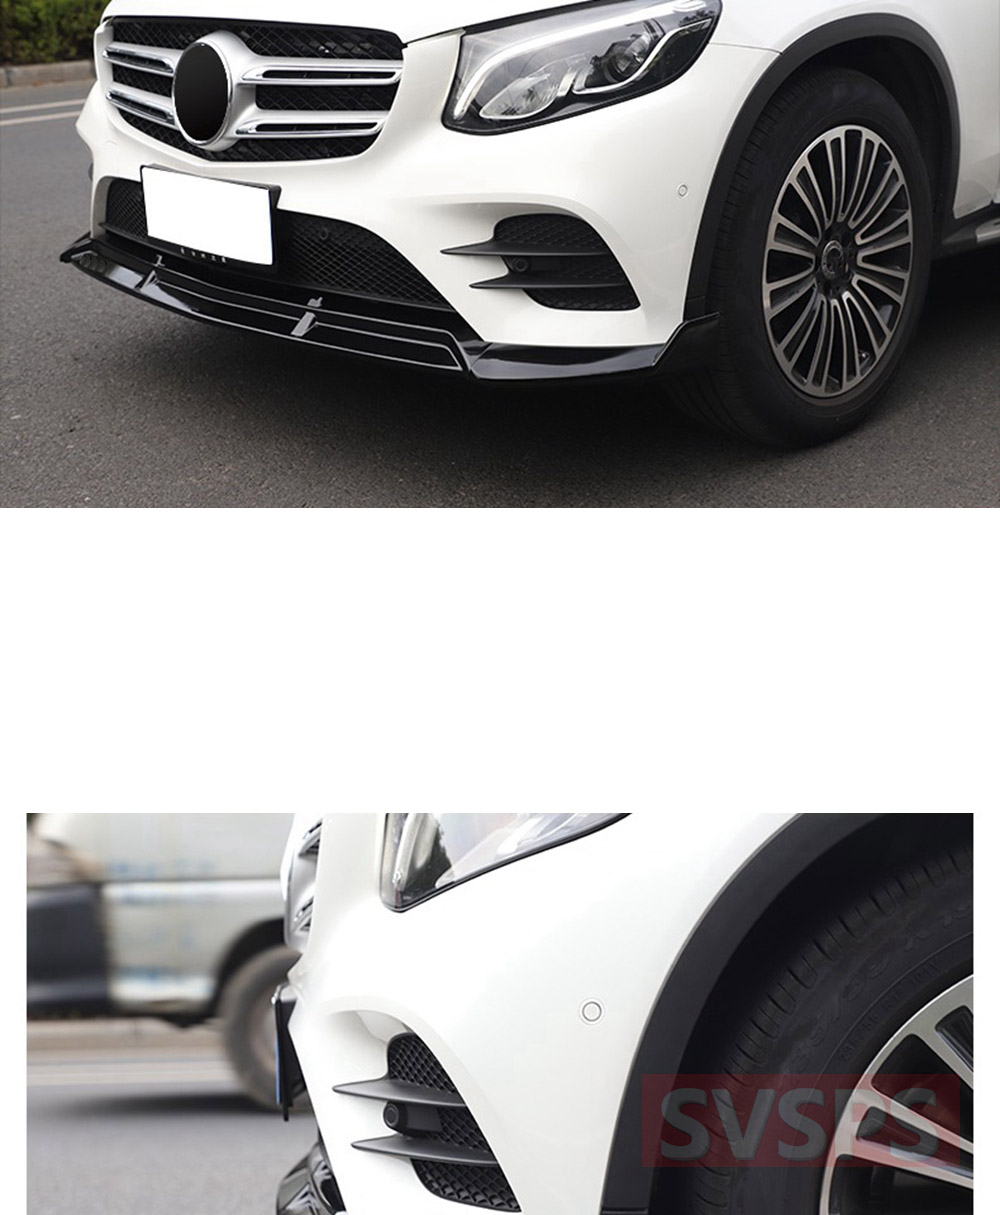 Tuning Parts Front Bumper Lip For Mercedes Benz For Brabus GLC Class GLC Coupe X253 C253 GLC200 GLC260 GLC300 2015-2018 year